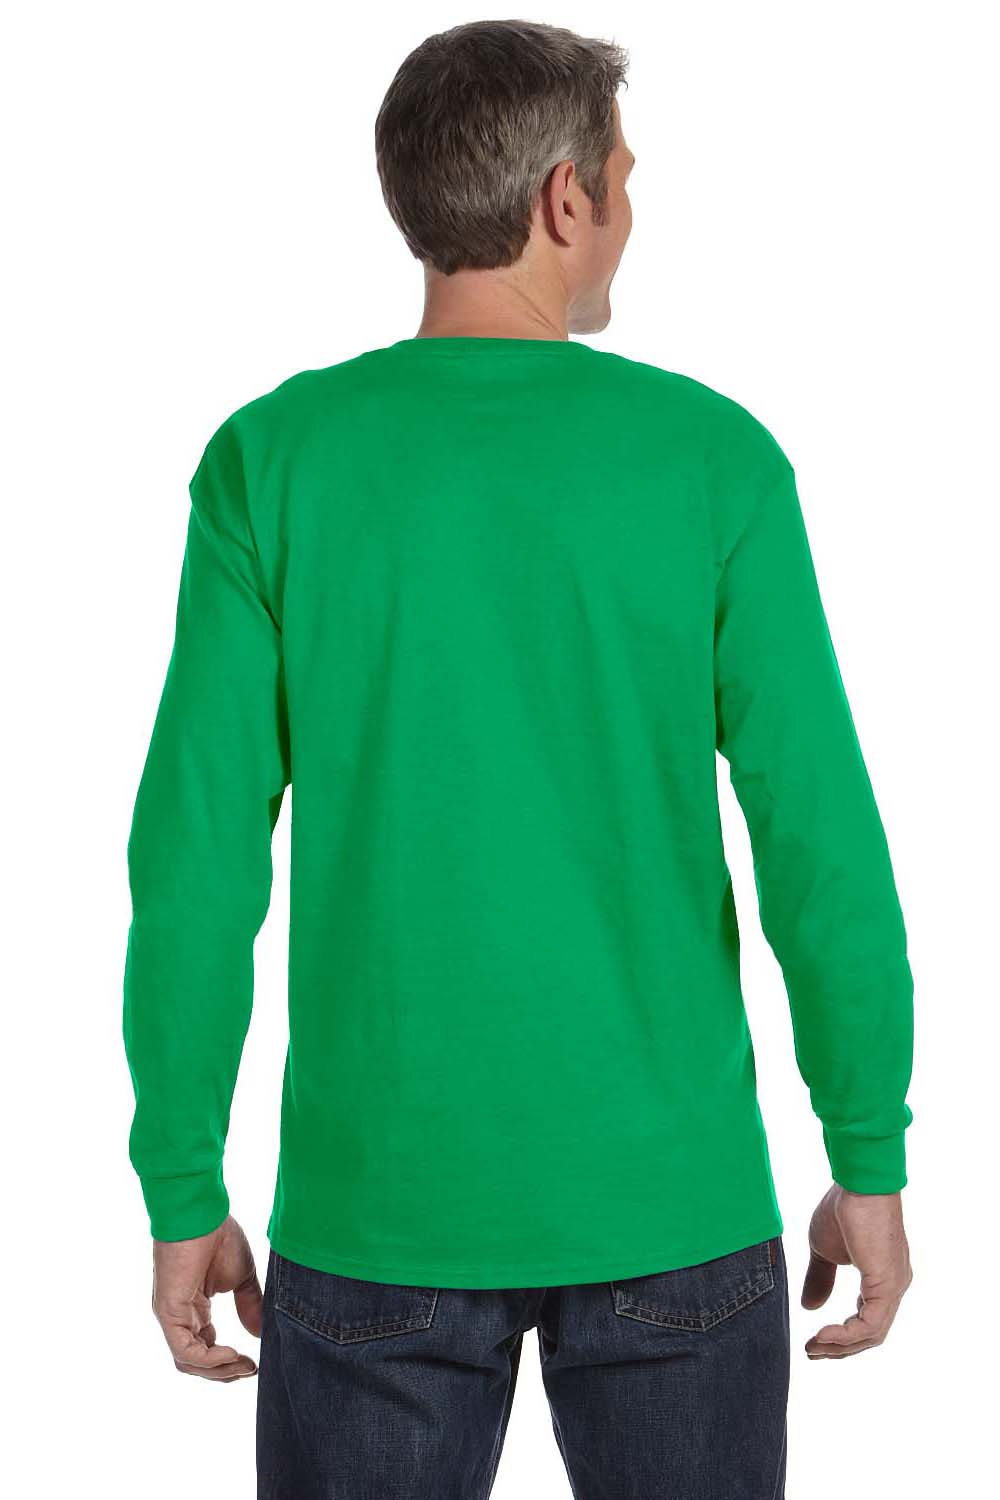 Jerzees 29L Mens Dri-Power Moisture Wicking Long Sleeve Crewneck T-Shirt Kelly Green Back